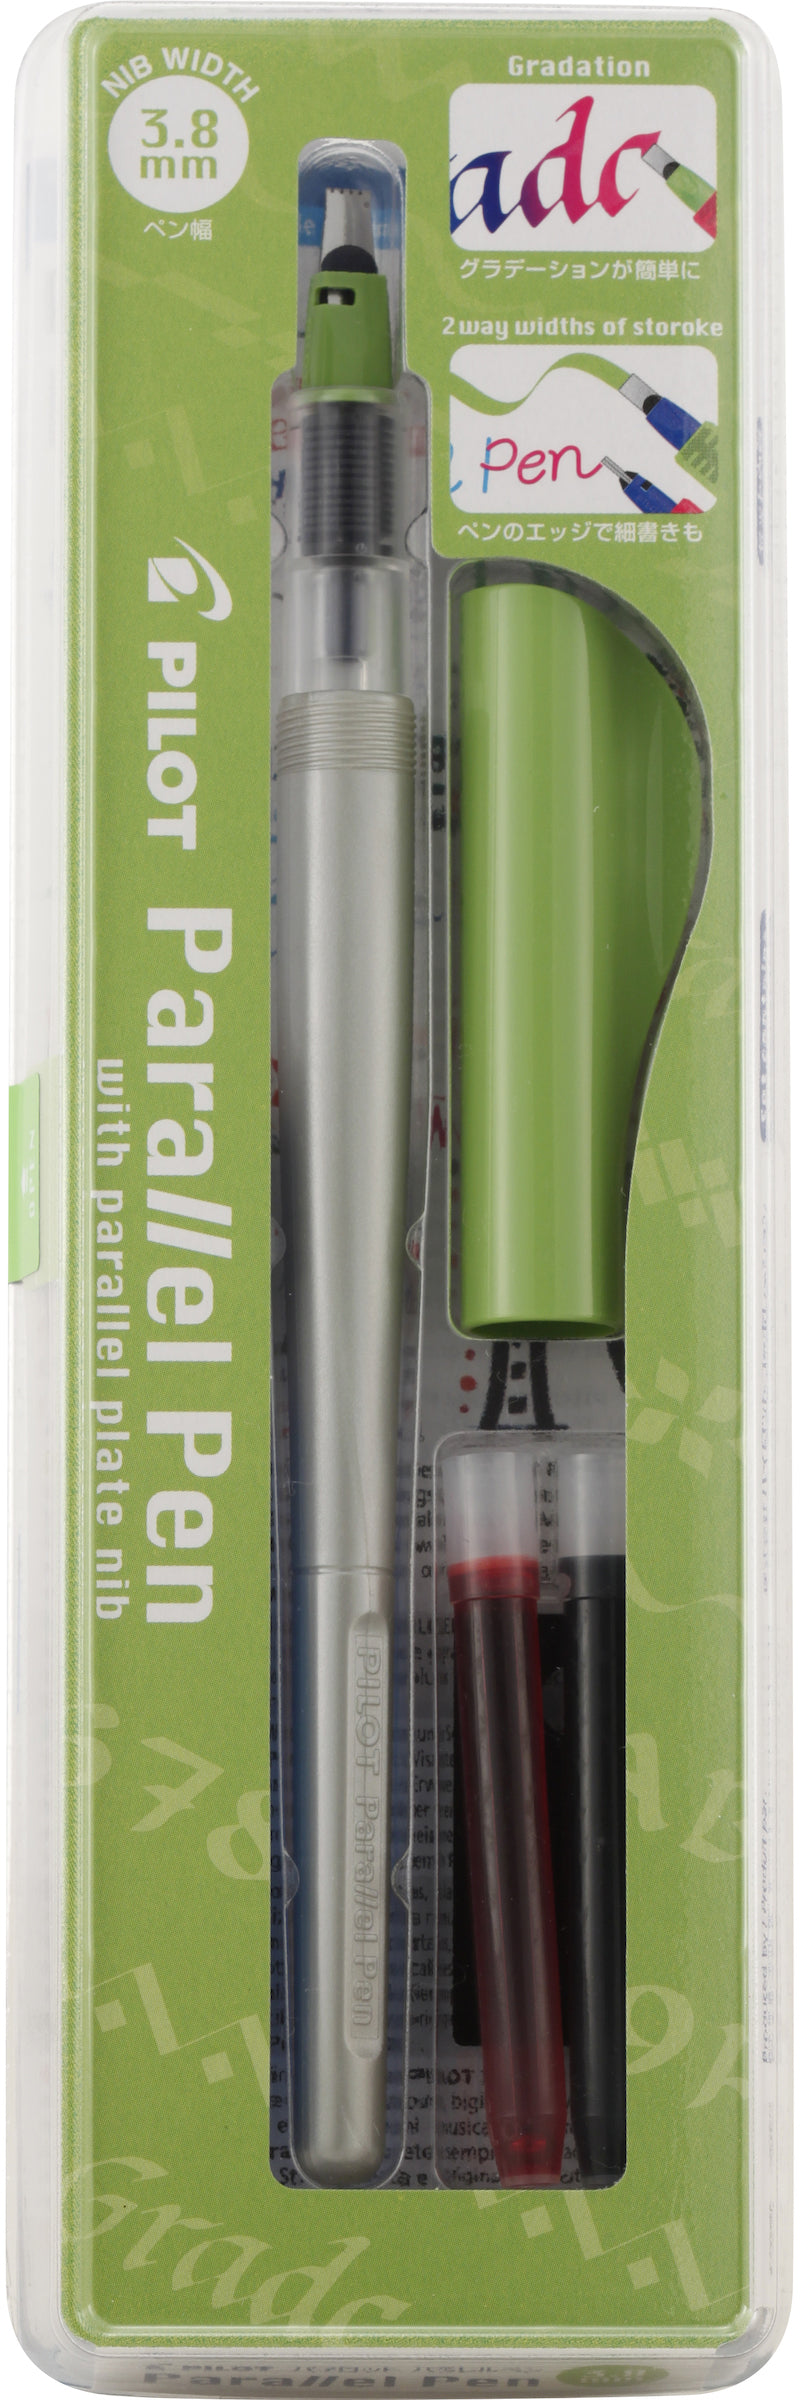 Pilot Parallel Fountain Pen - Pink, 3.0mm